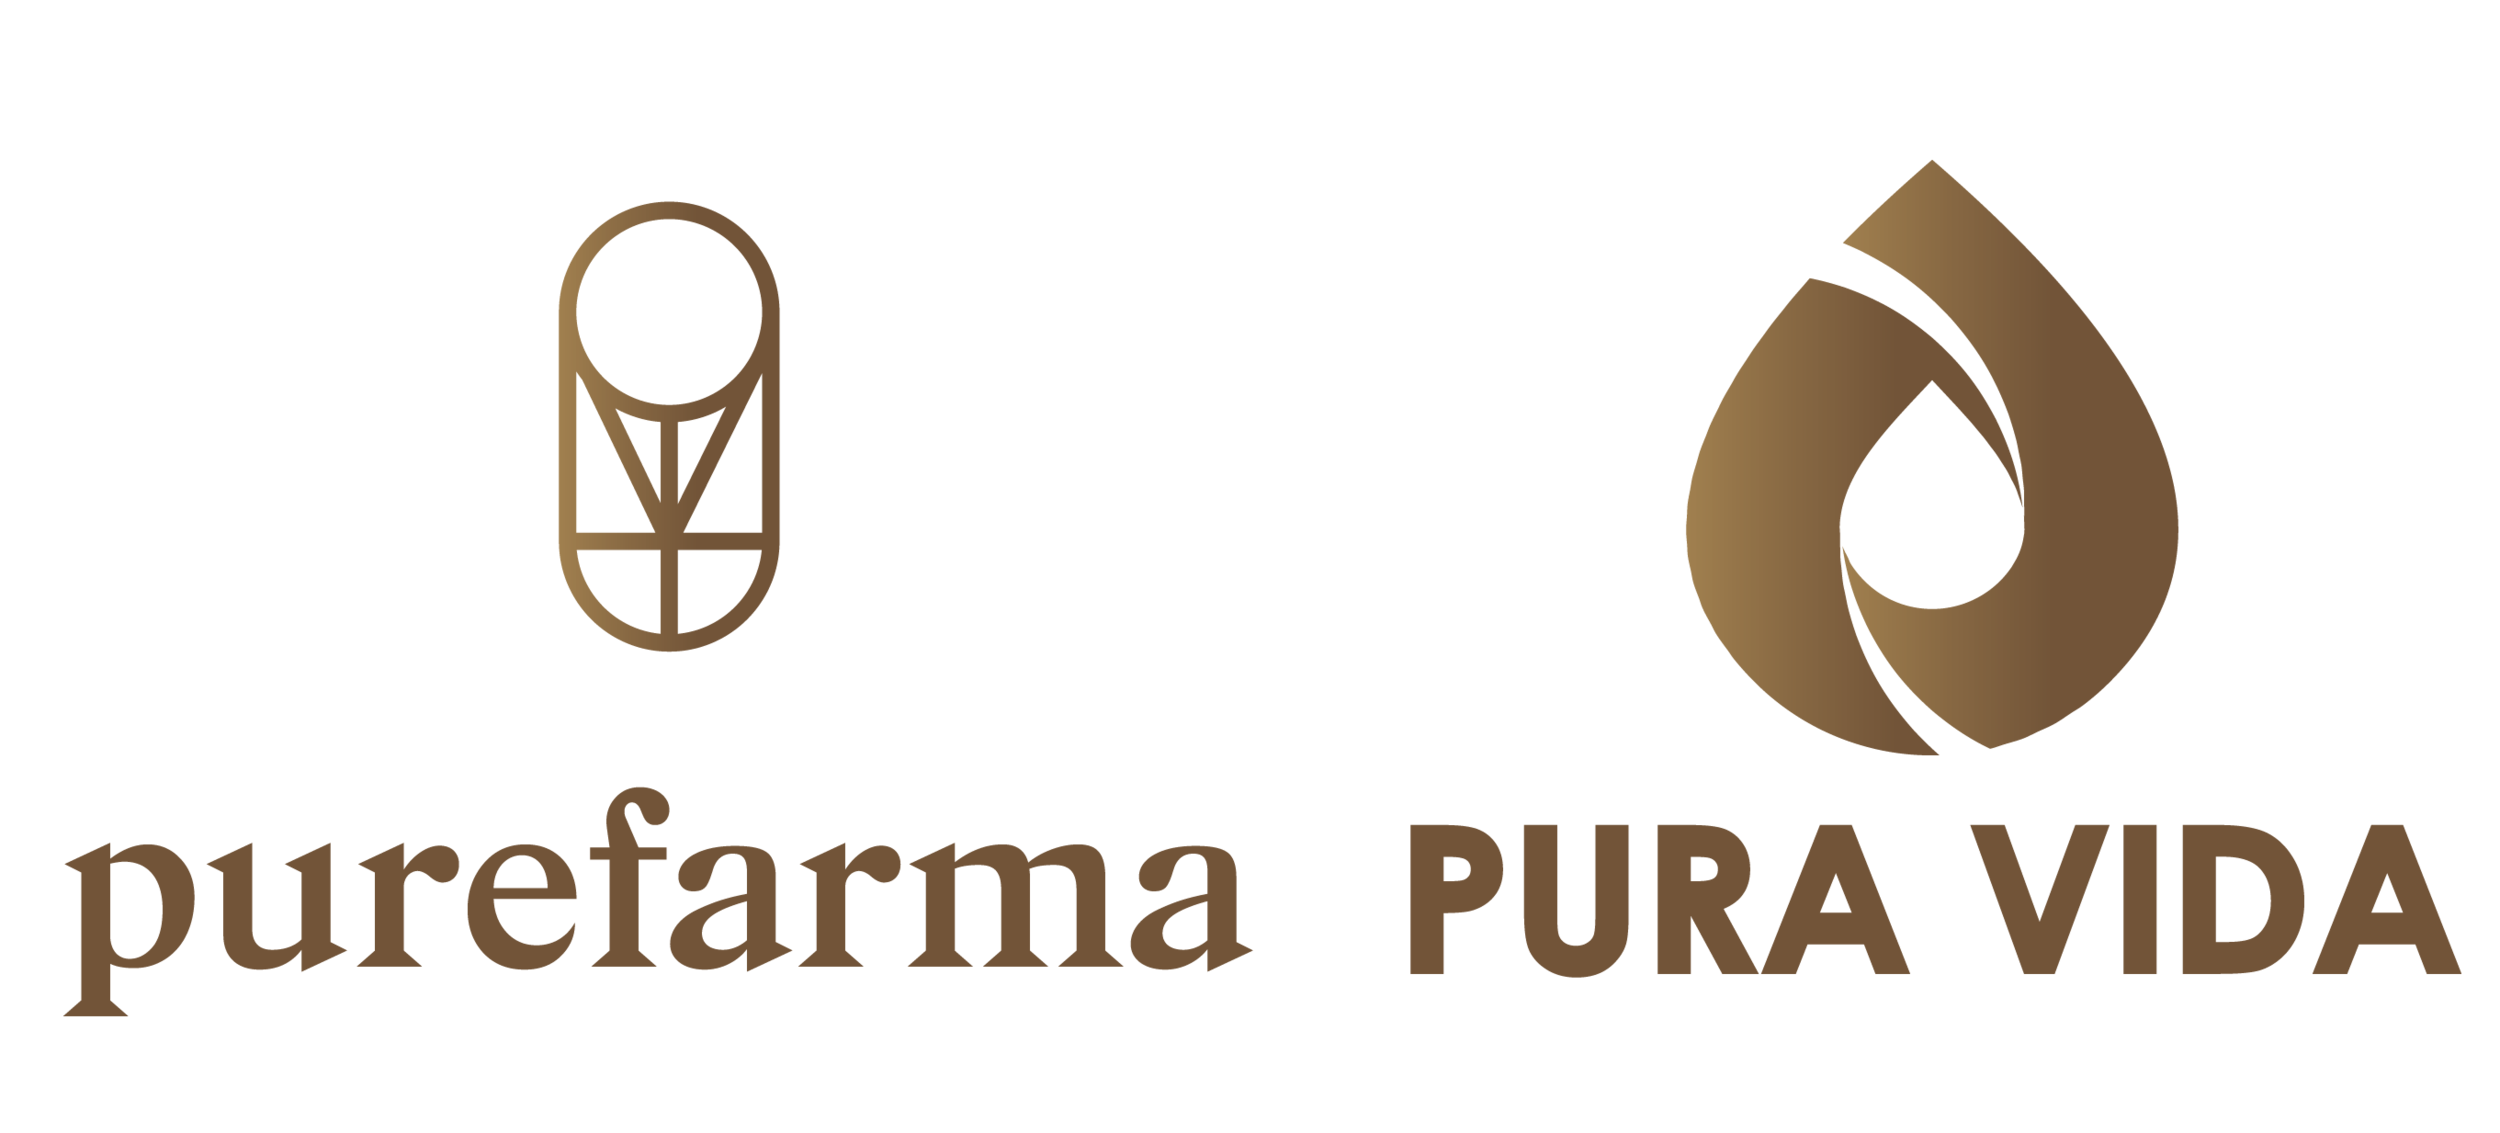 Purefarma Cannabis Brand Logo